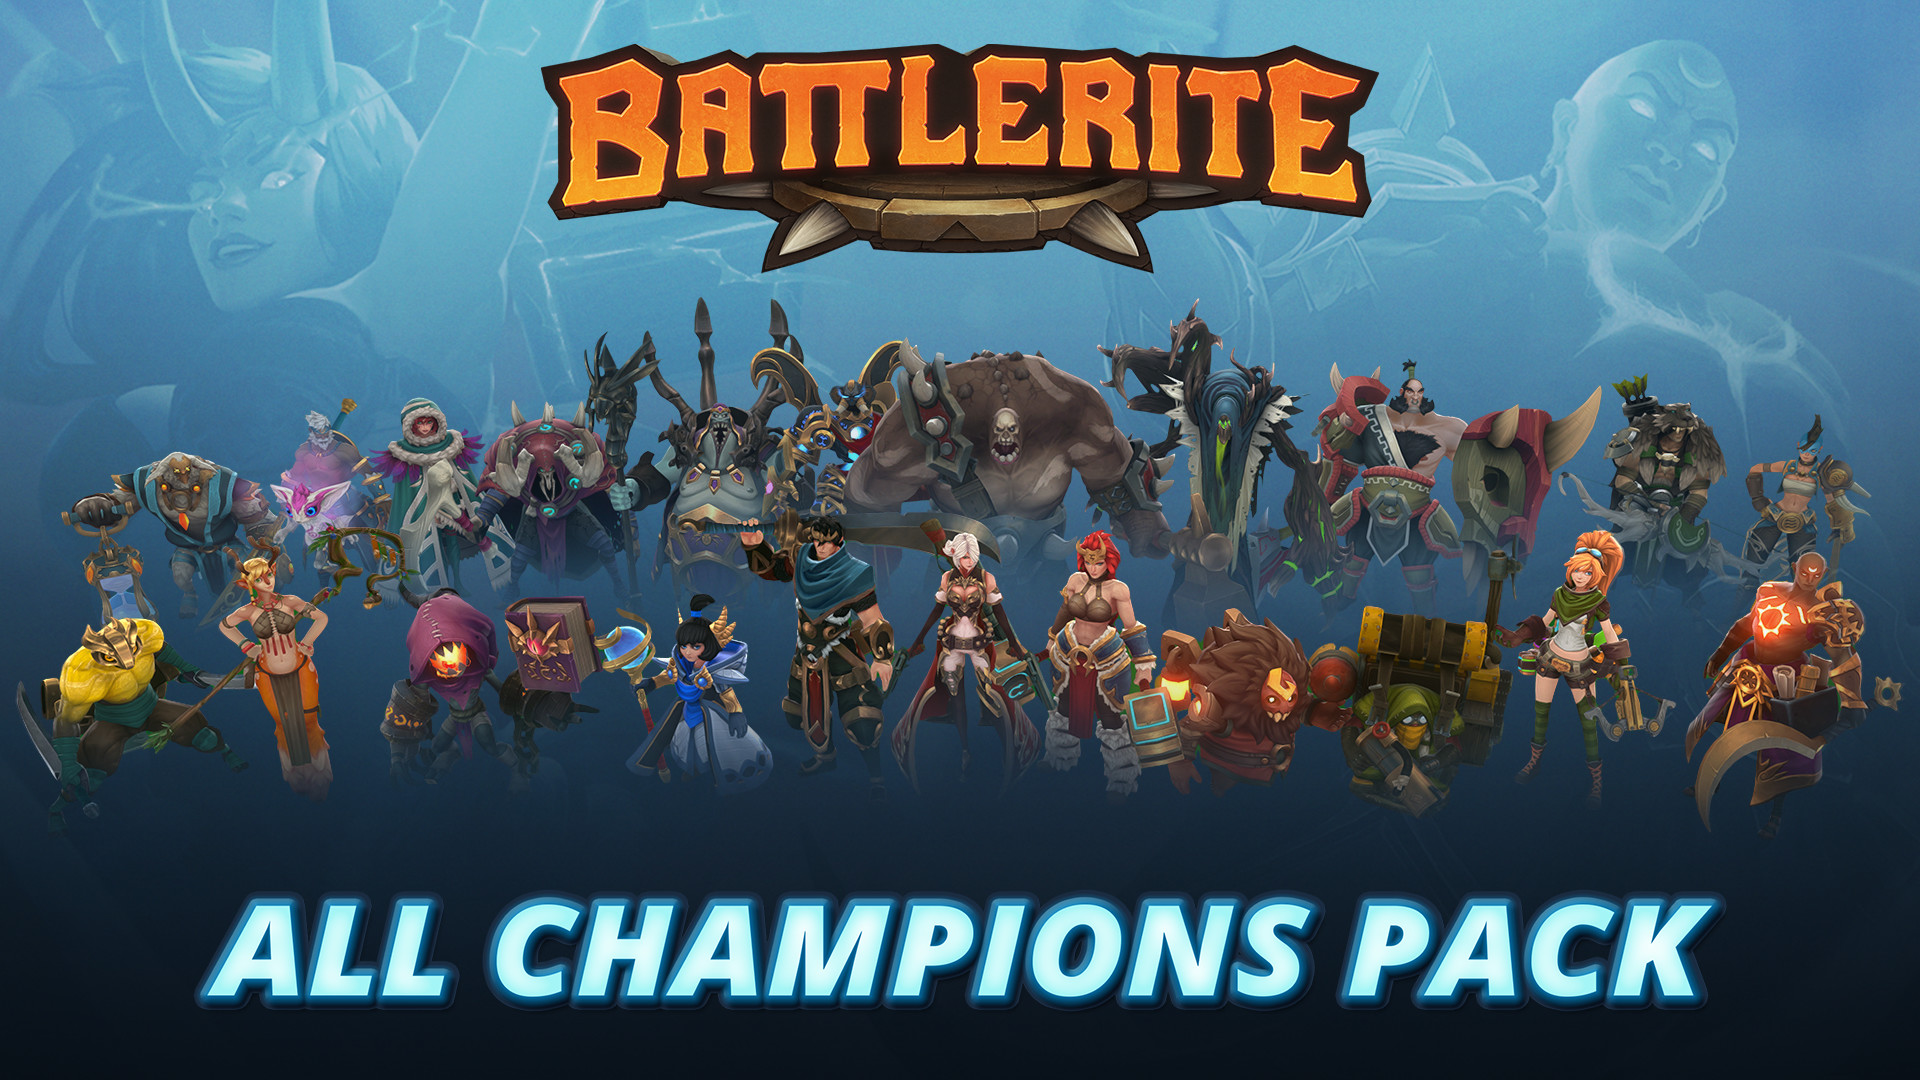 Battlerite - All Champions Pack on Steam